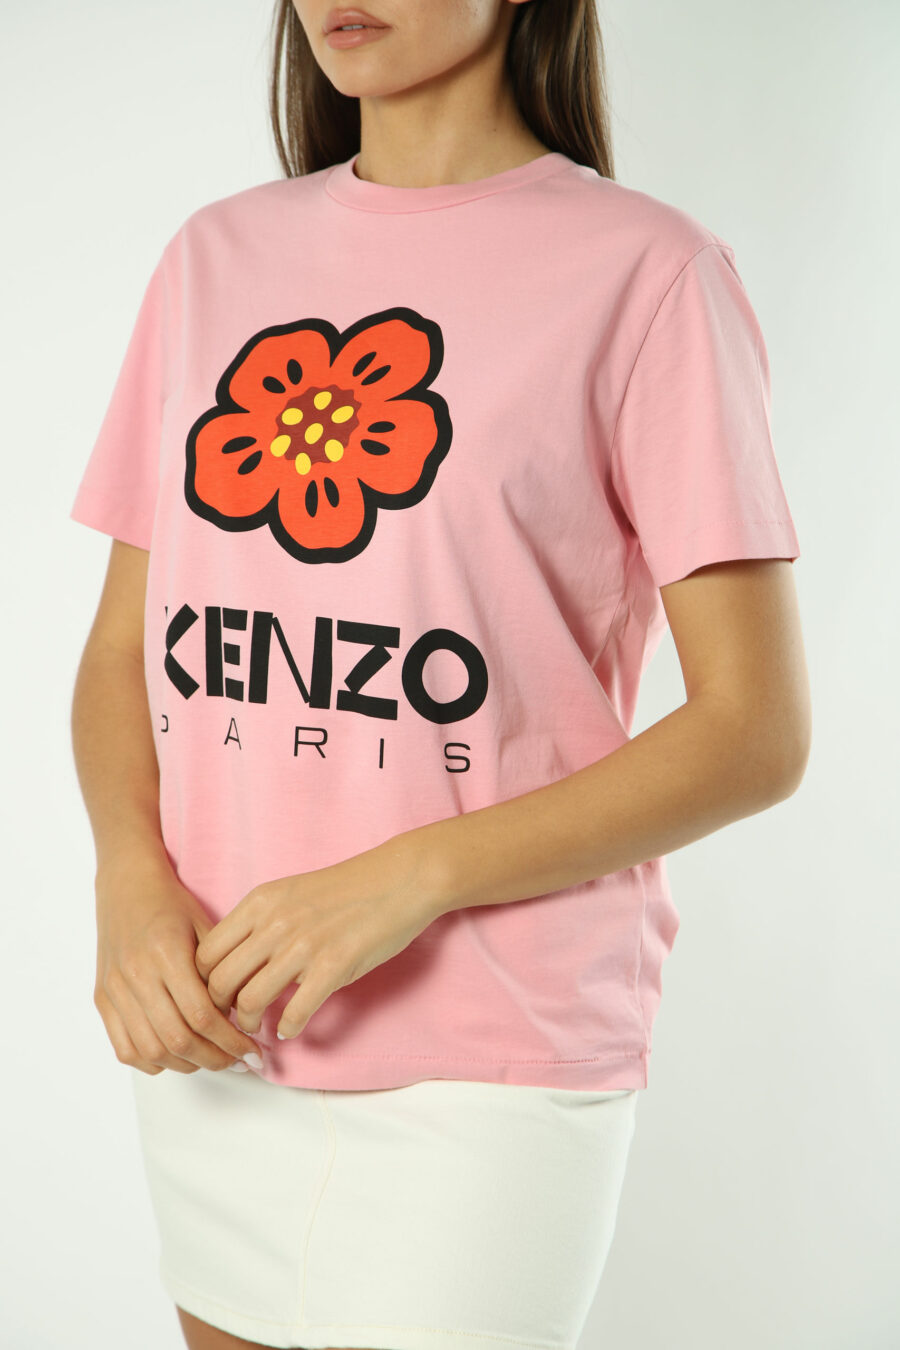 Rosa T-Shirt mit orangefarbener Blume maxilogo - Fotos 1403